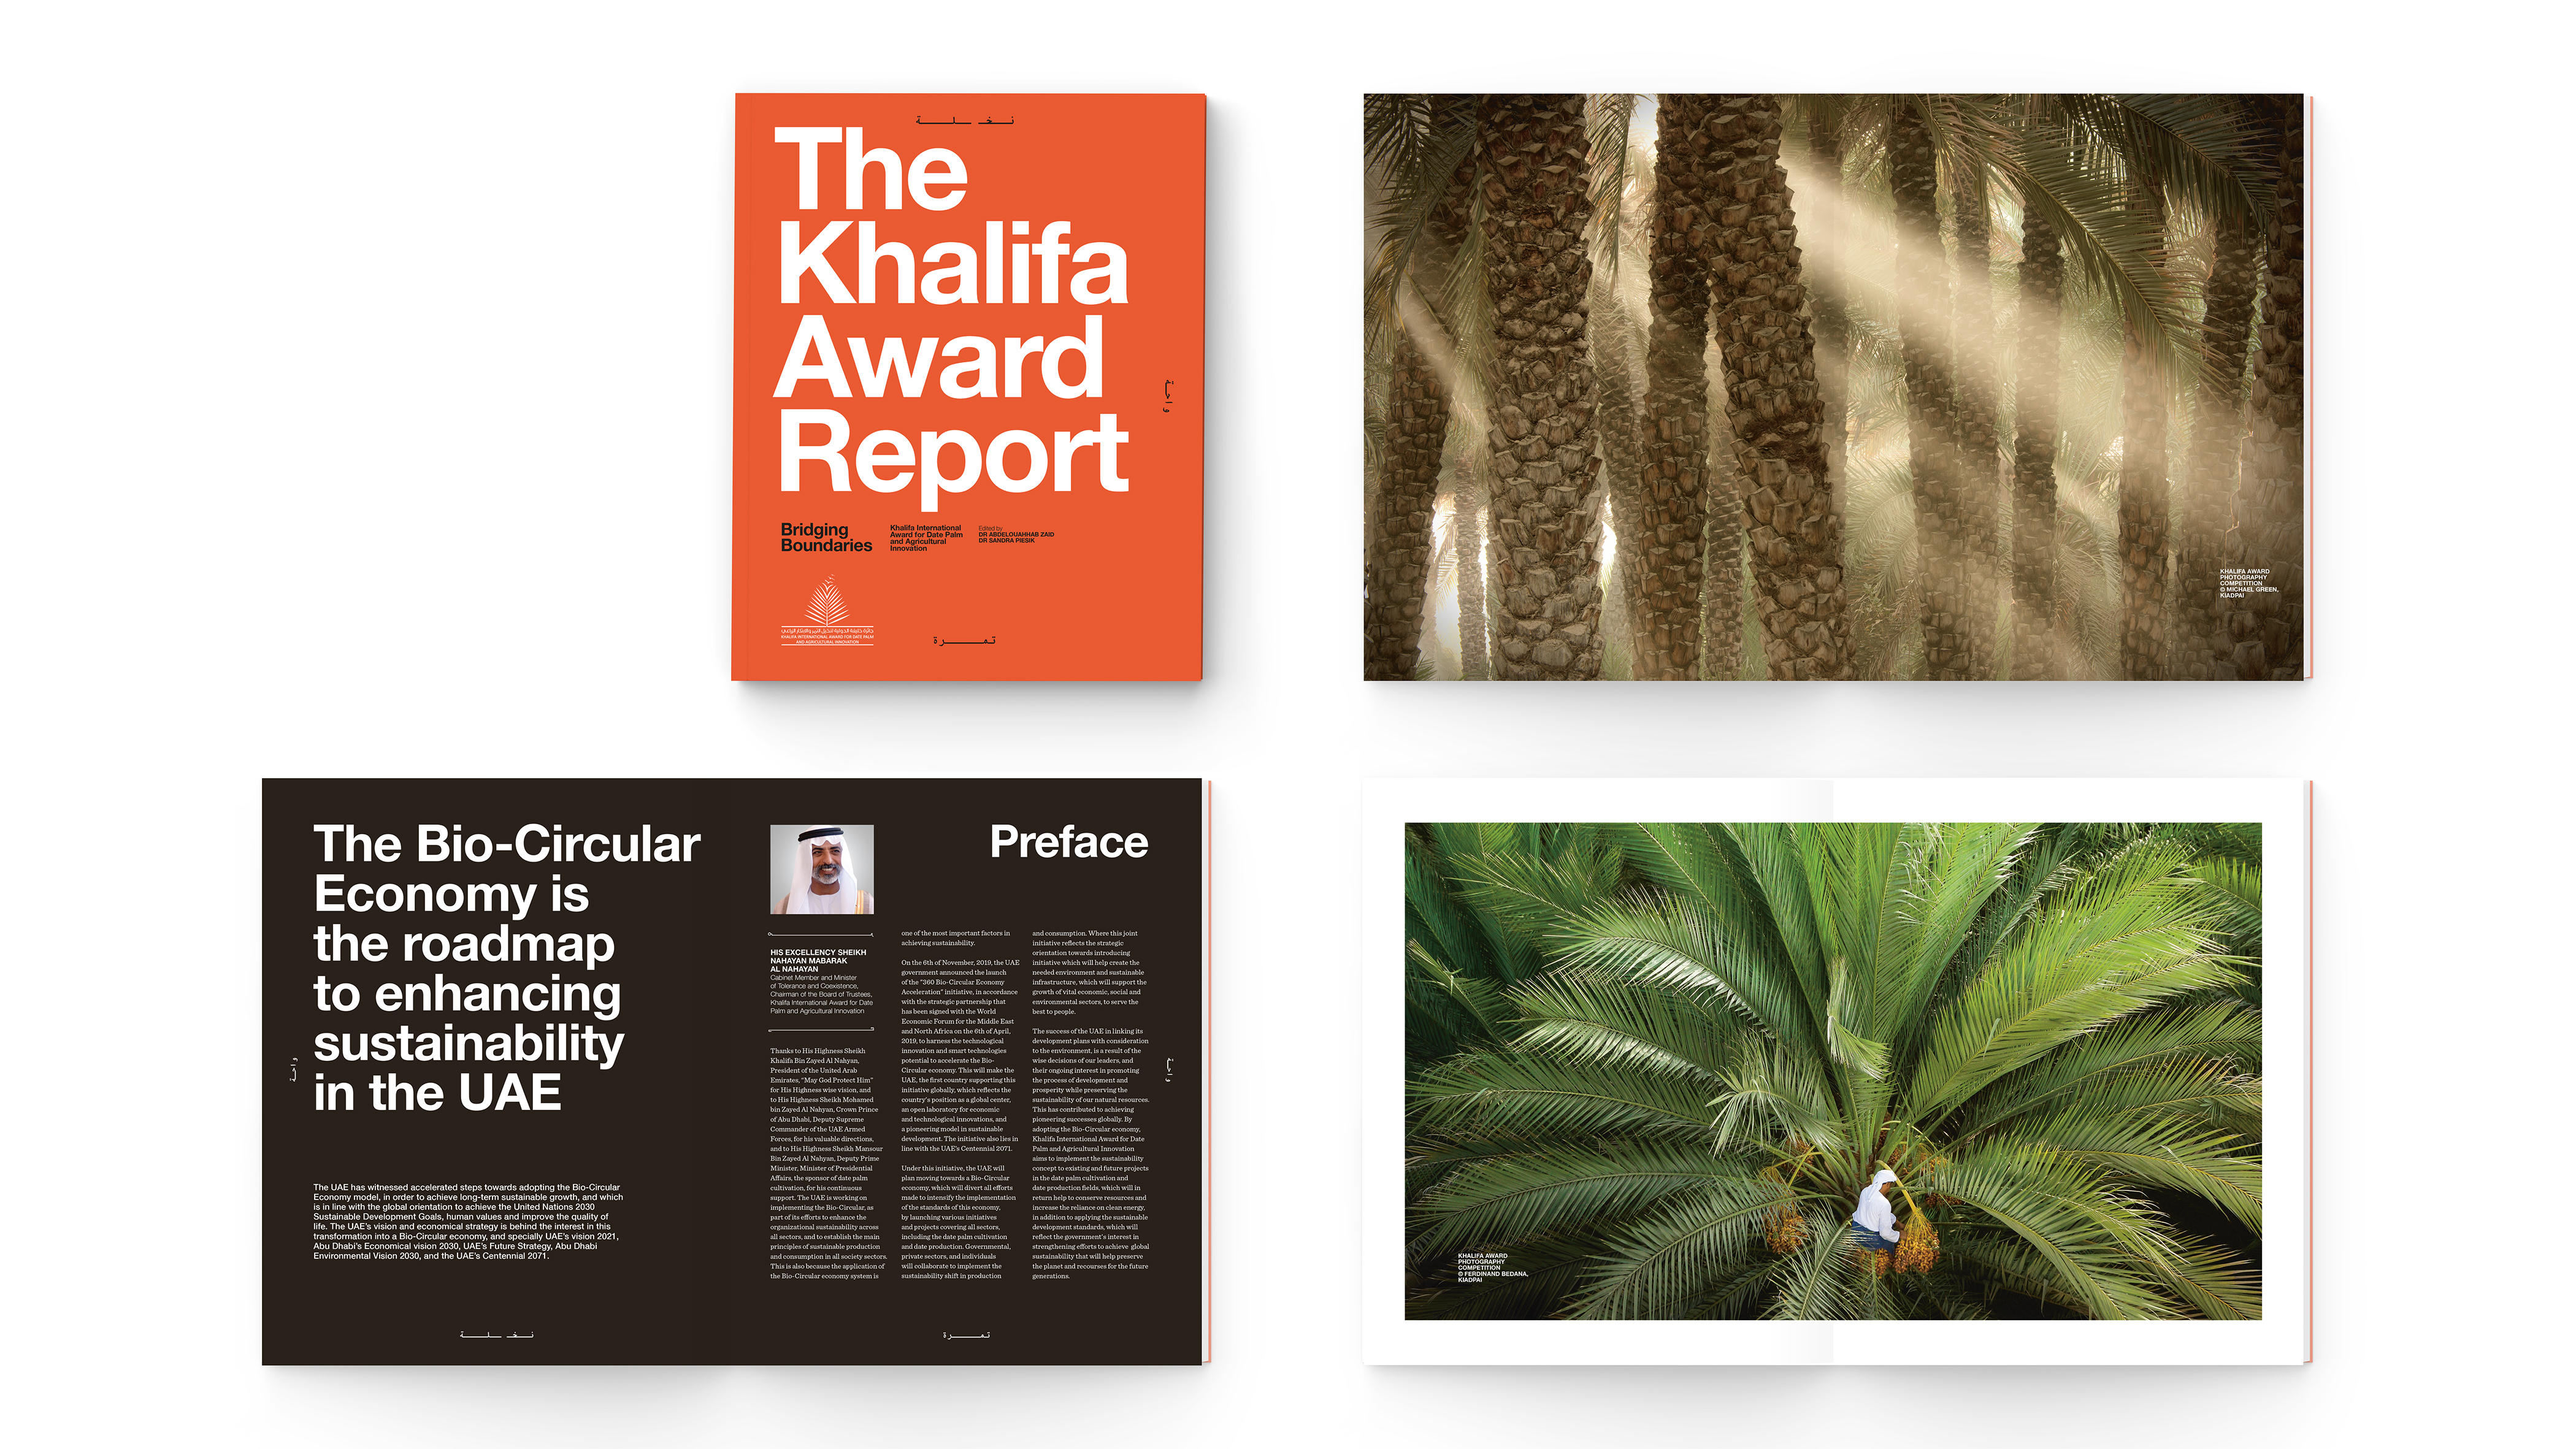 The Khalifa Award Report